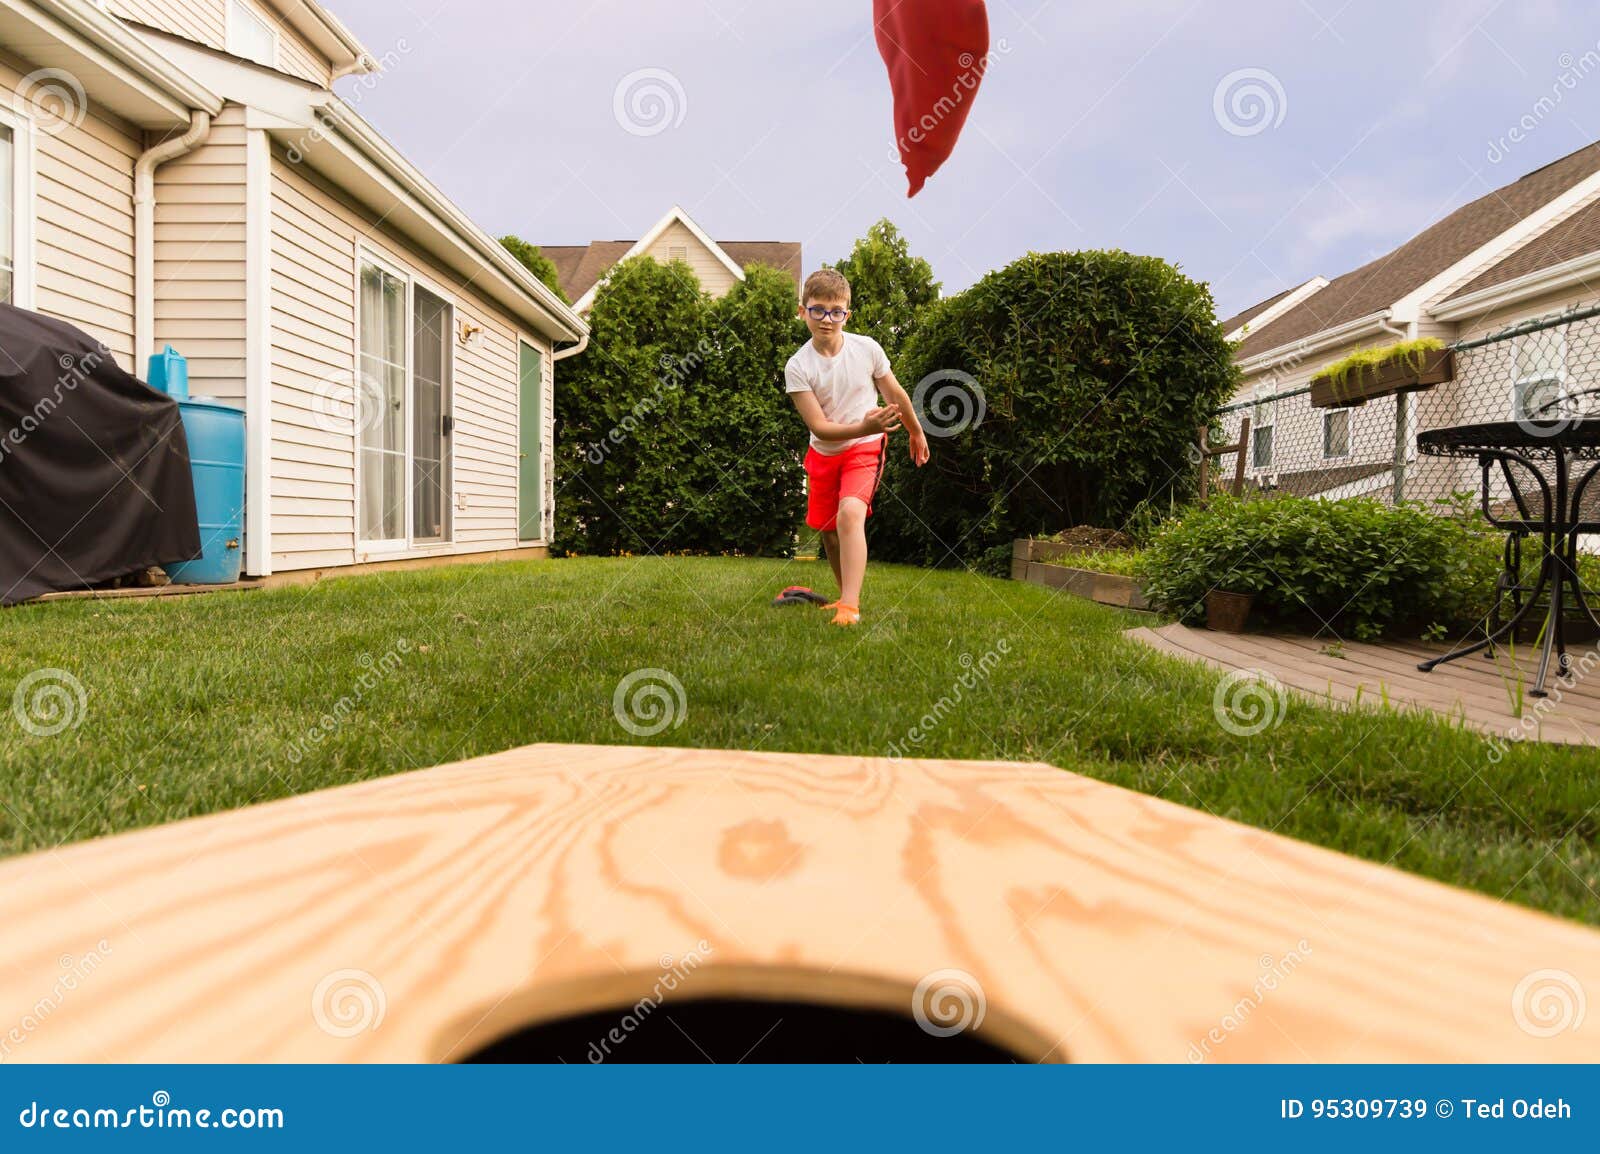 boy playing bean bag toss in the backyard!